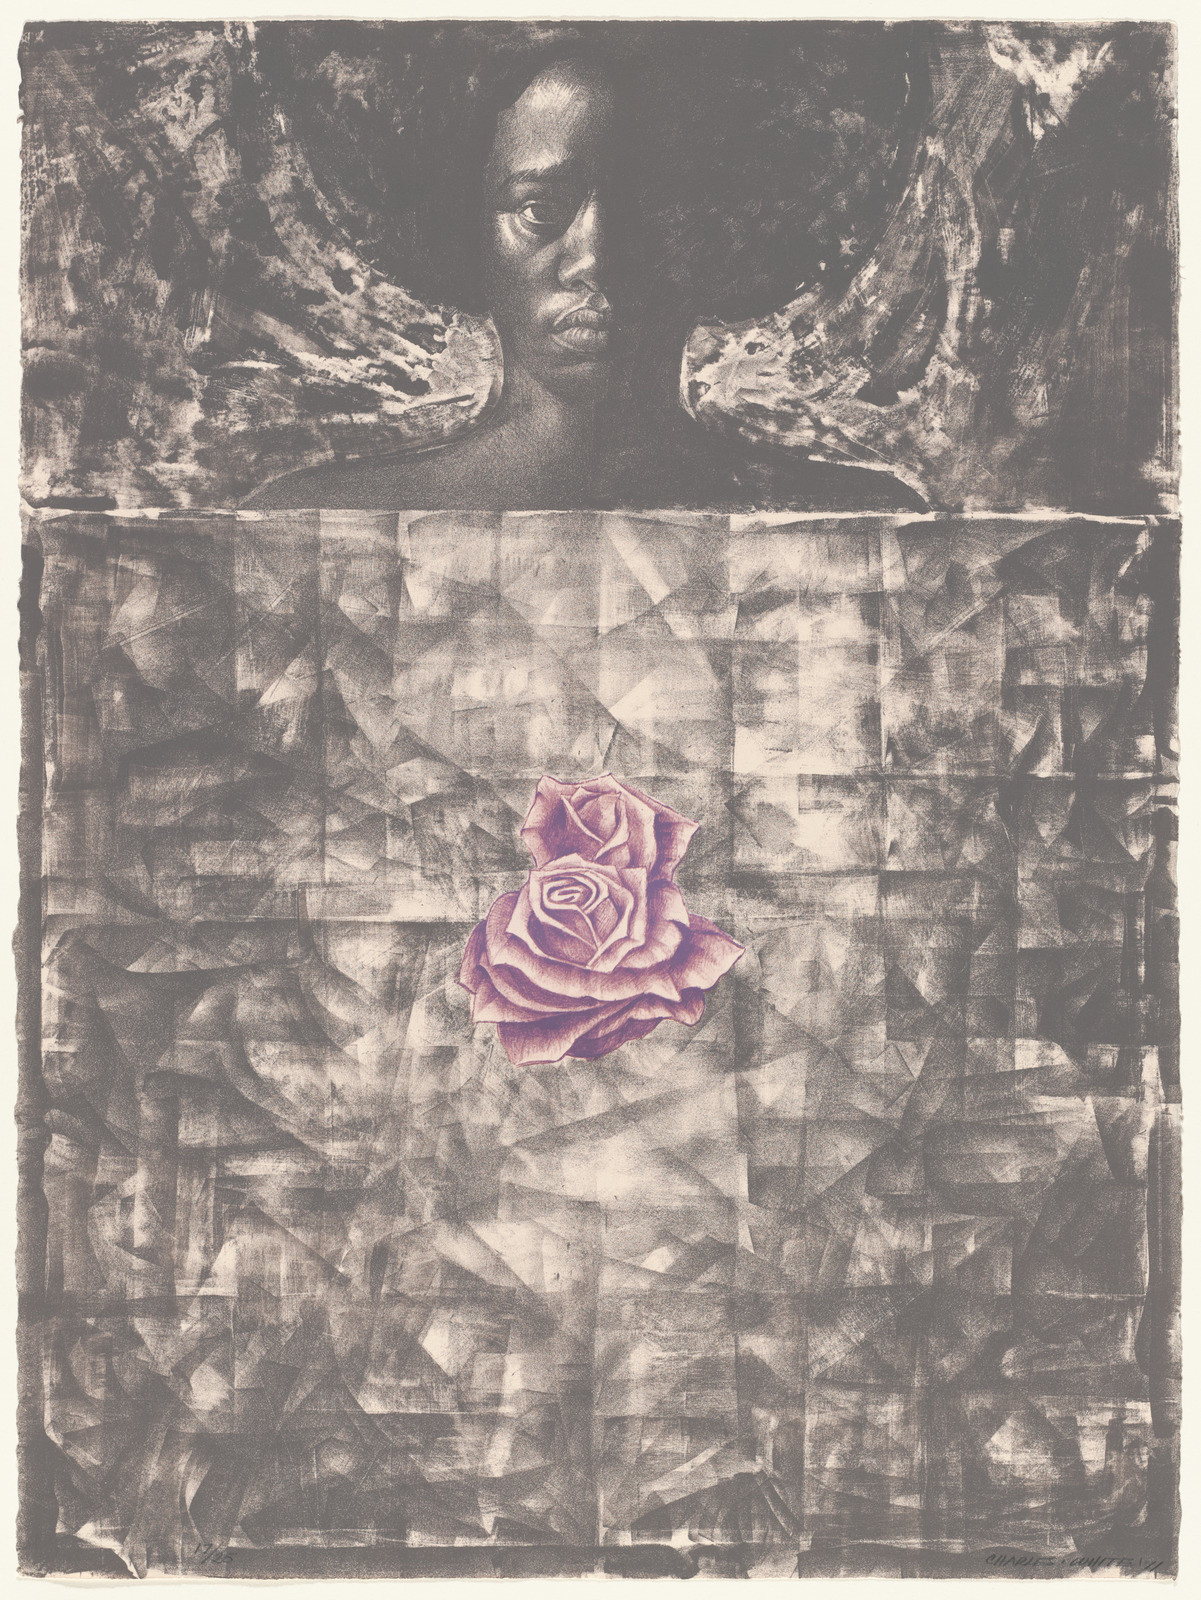 Charles White. _Love Letter I_. 1971. Lithograph, 30 1/16 x 22 3/8" (76.4 x 56.8 cm). The Museum of Modern Art, New York. John B. Turner Fund. © The Charles White Archives/ Digital Image © The Museum of Modern Art/ Licensed by SCALA/Art Resource, NY
